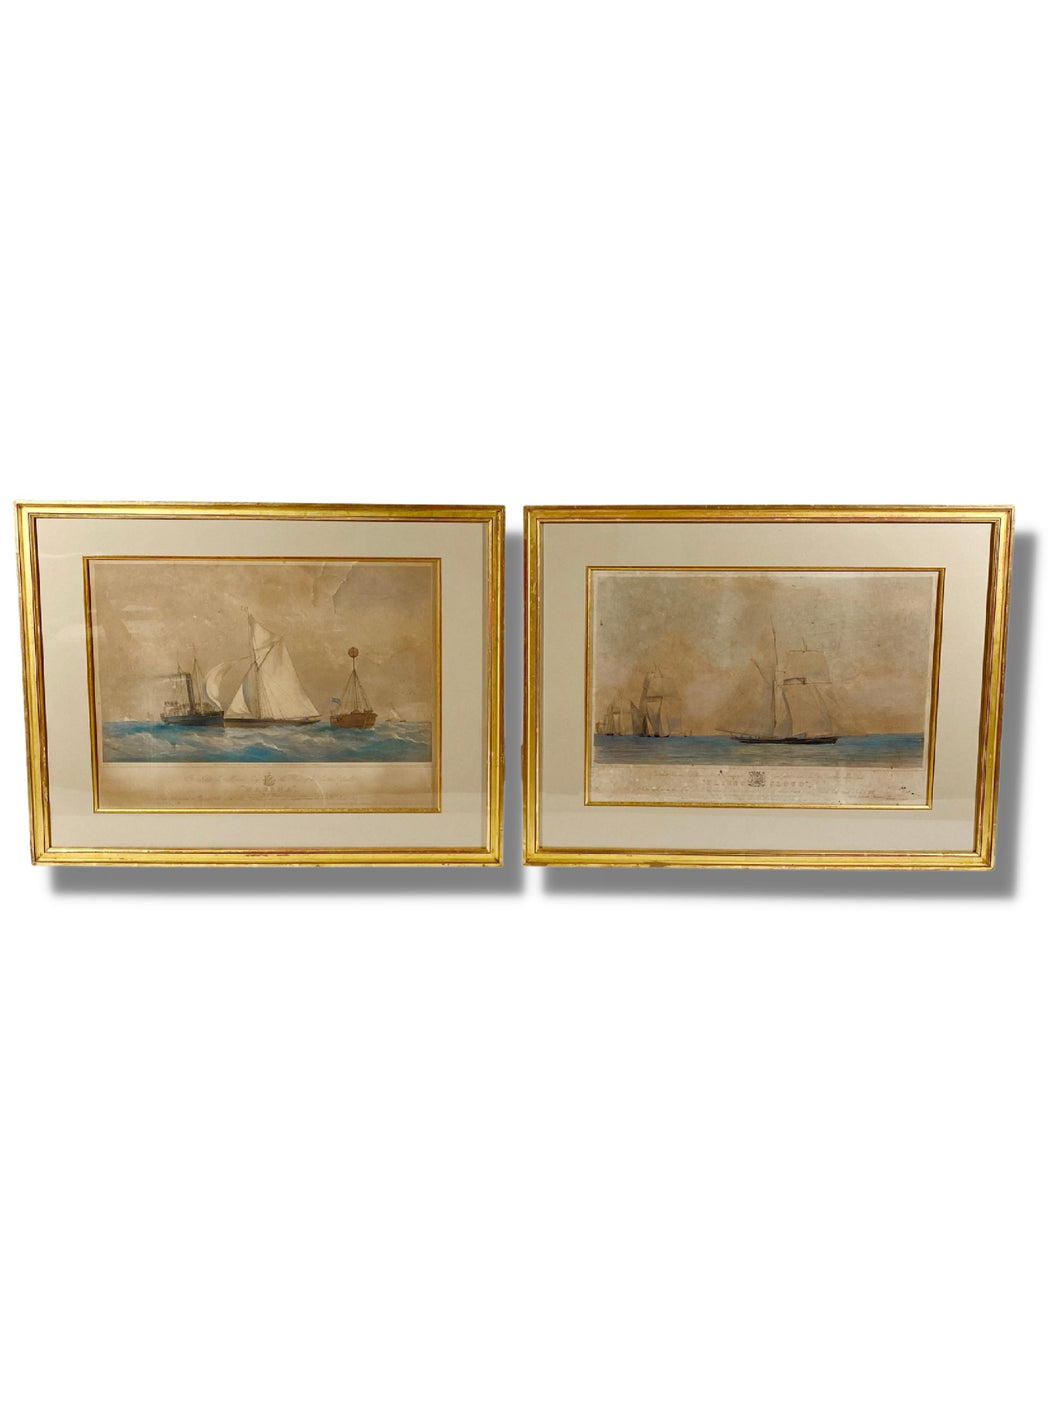 Antique Hand-Colored Ship Prints (Pair)